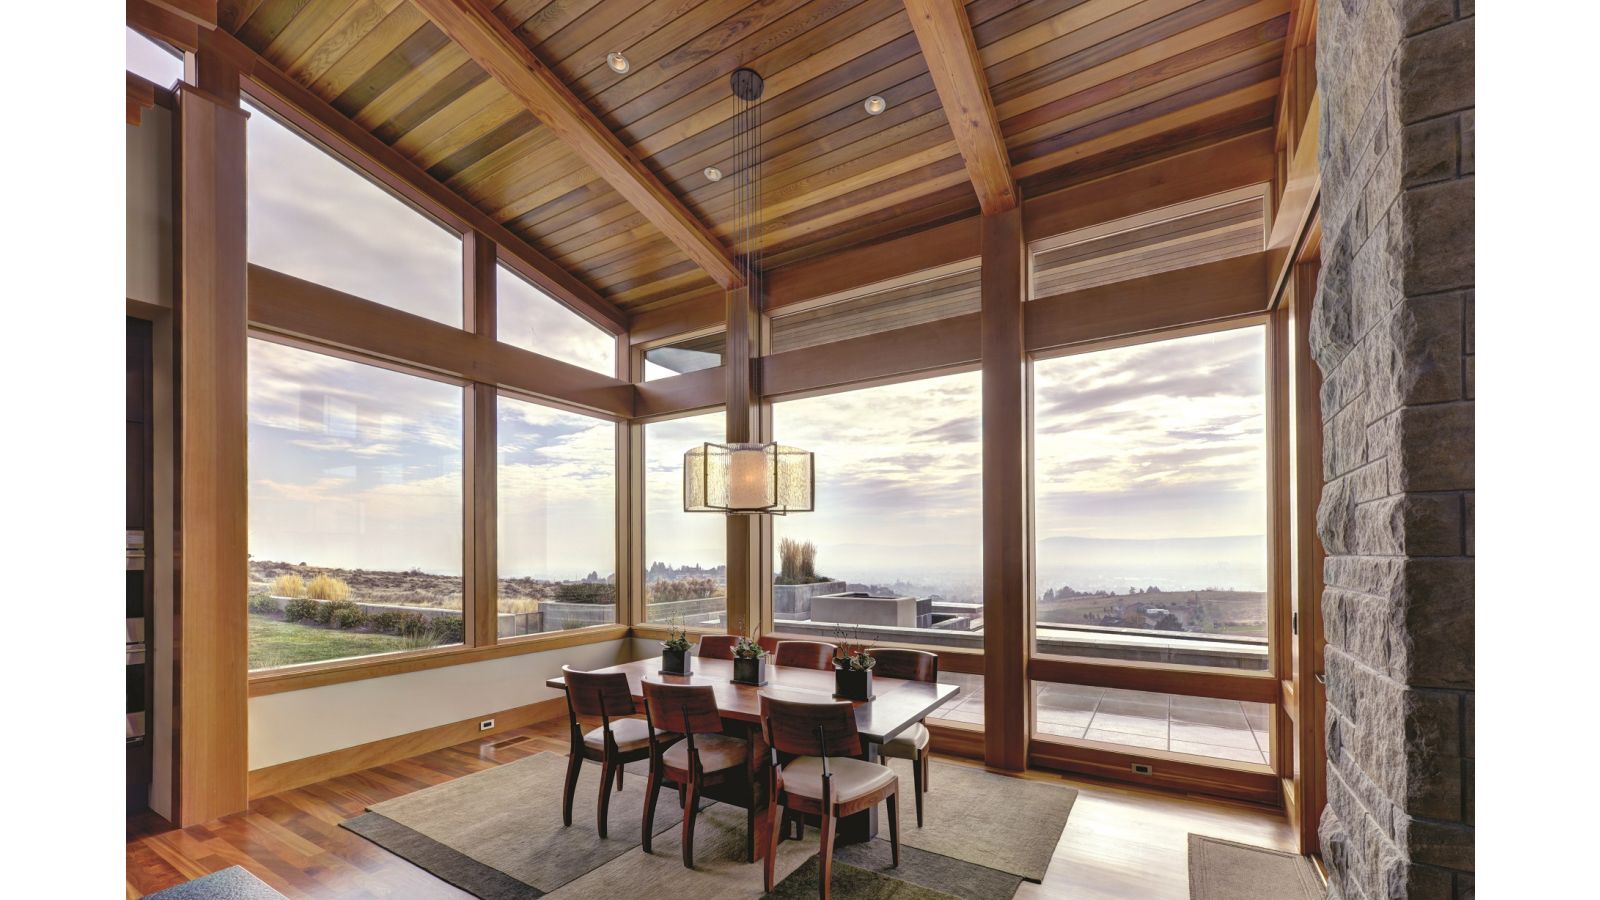 JELD-WEN® EpicVue™ contemporary clad-wood windows and patio doors